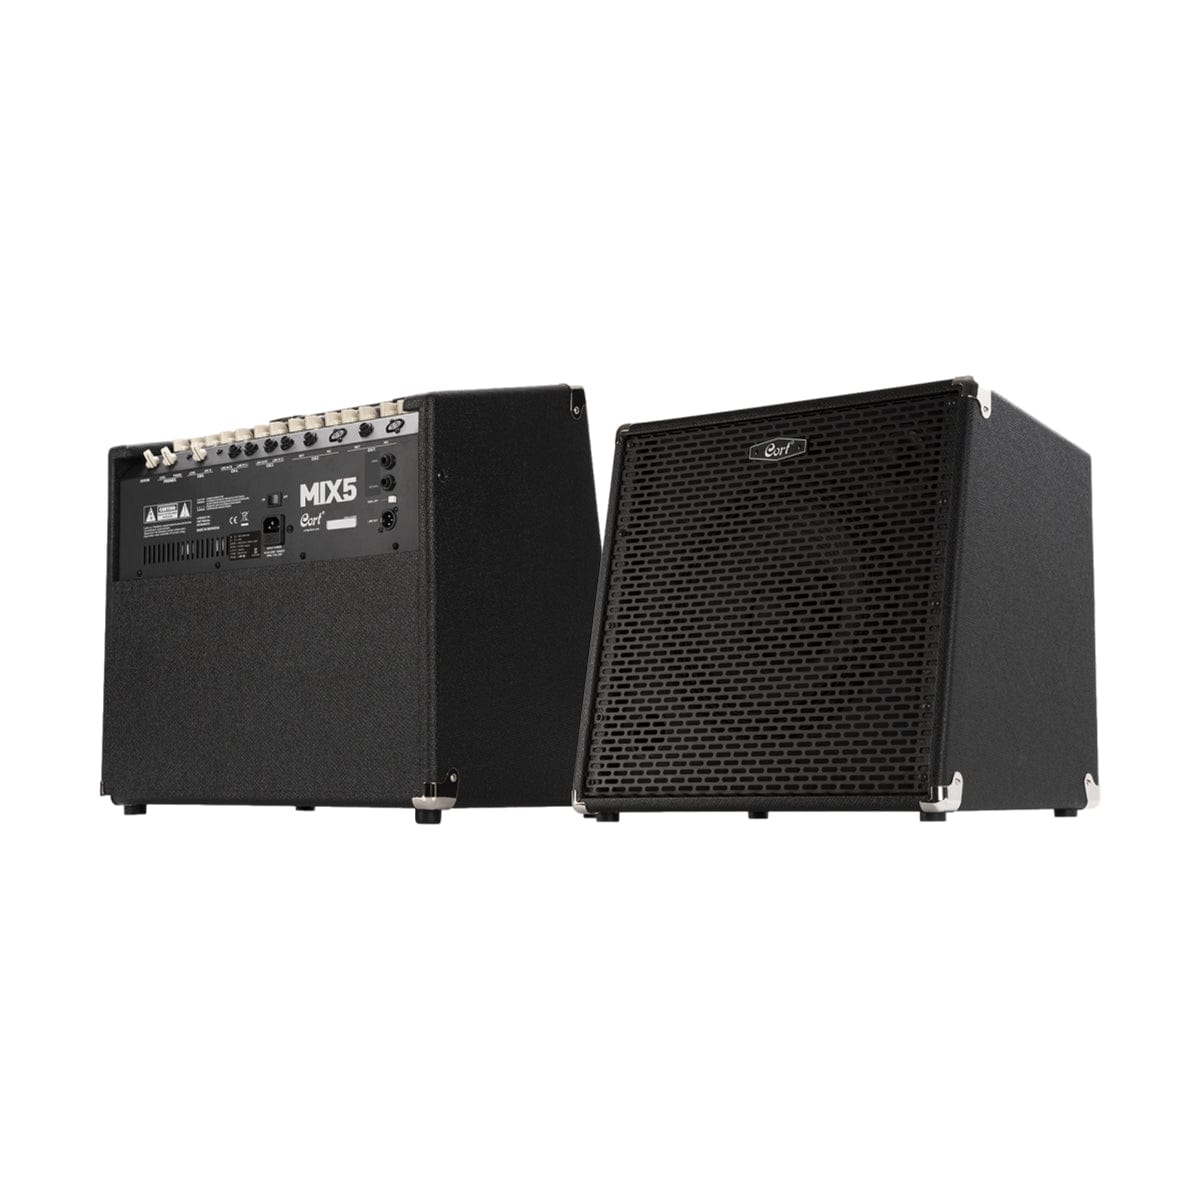 Cort Amps Cort MIX5 Multi-Purpose Amplifier 150W 5-Channel - Byron Music